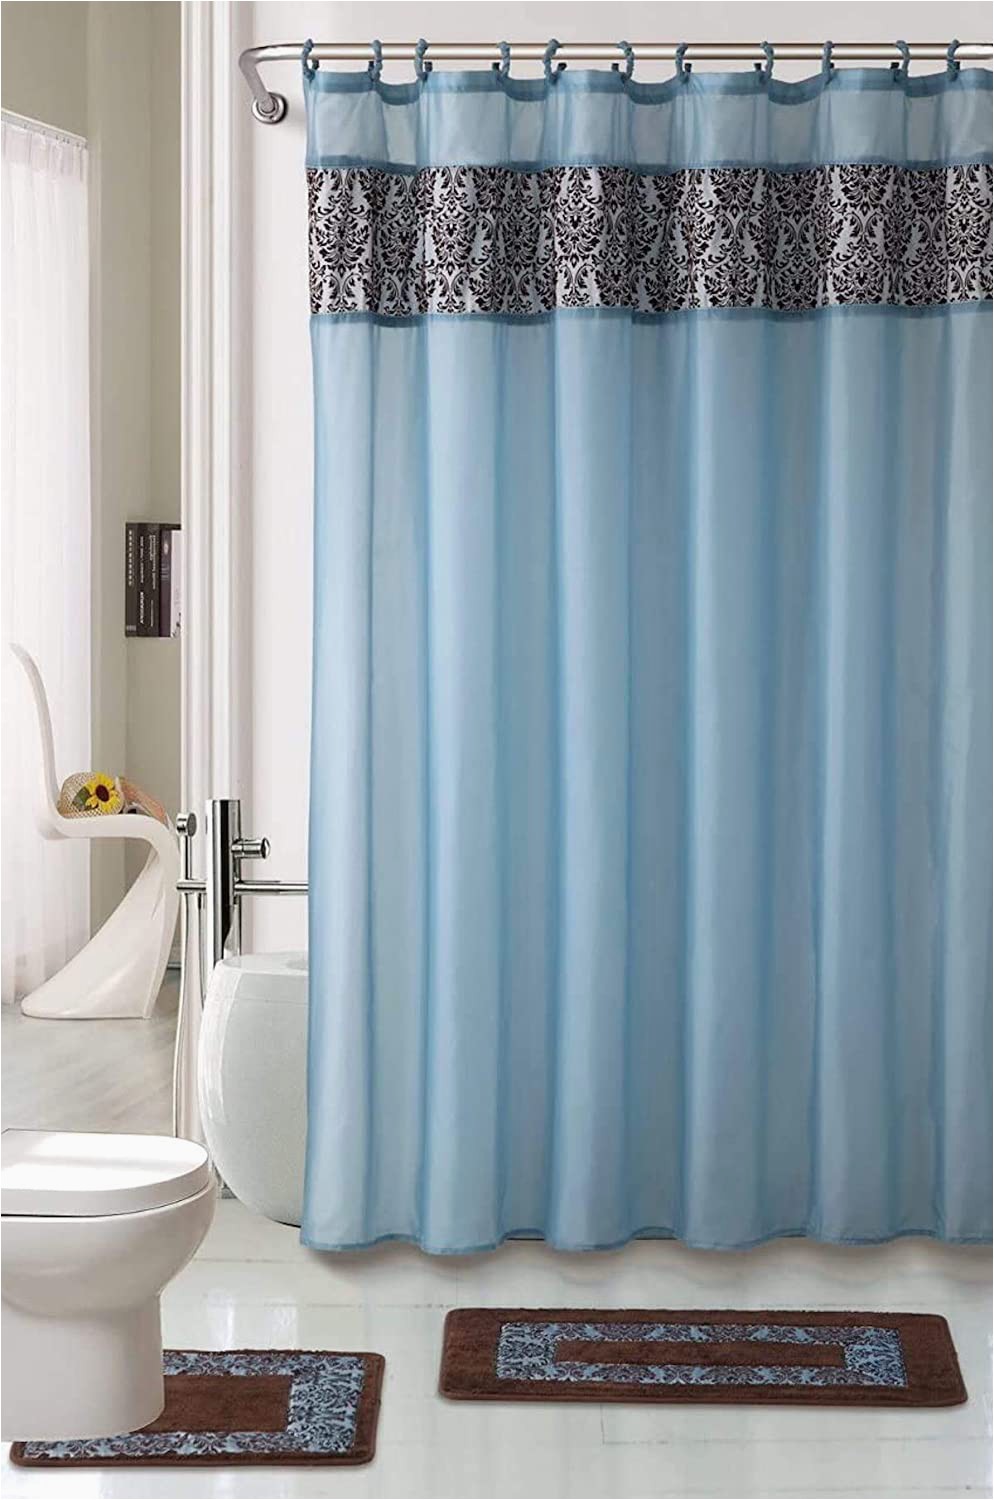 Shower Curtain Bath Rug Set Wpm 4 Piece Luxury Majestic Flocking Blue Bath Rug Set 2 Piece Bathroom Rugs with Fabric Shower Curtain and Matching Rings